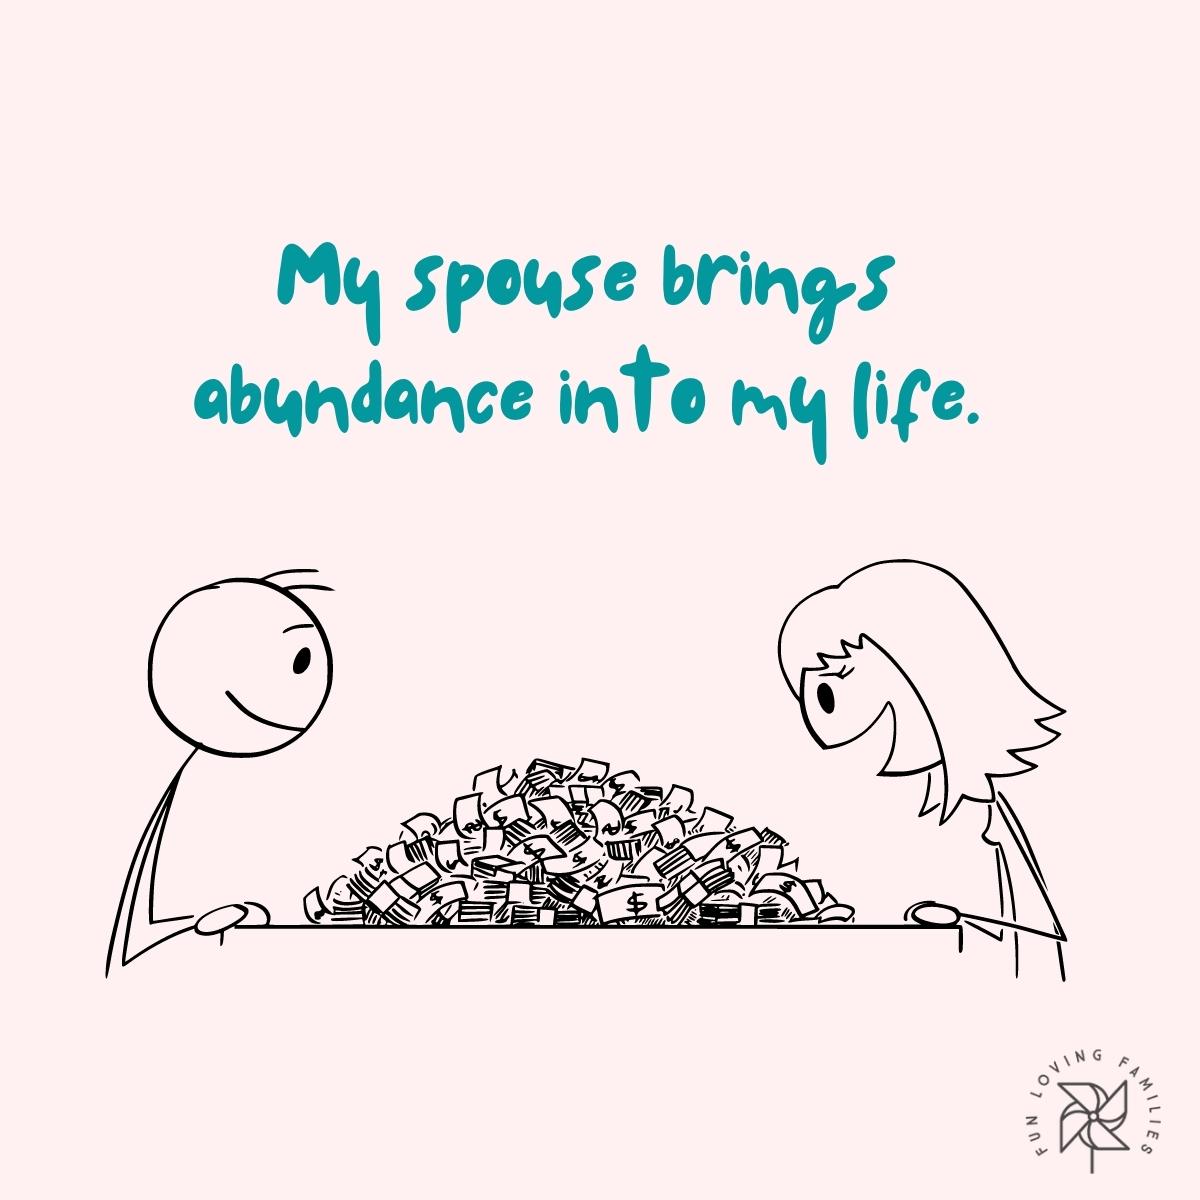 My spouse brings abundance into my life affirmation